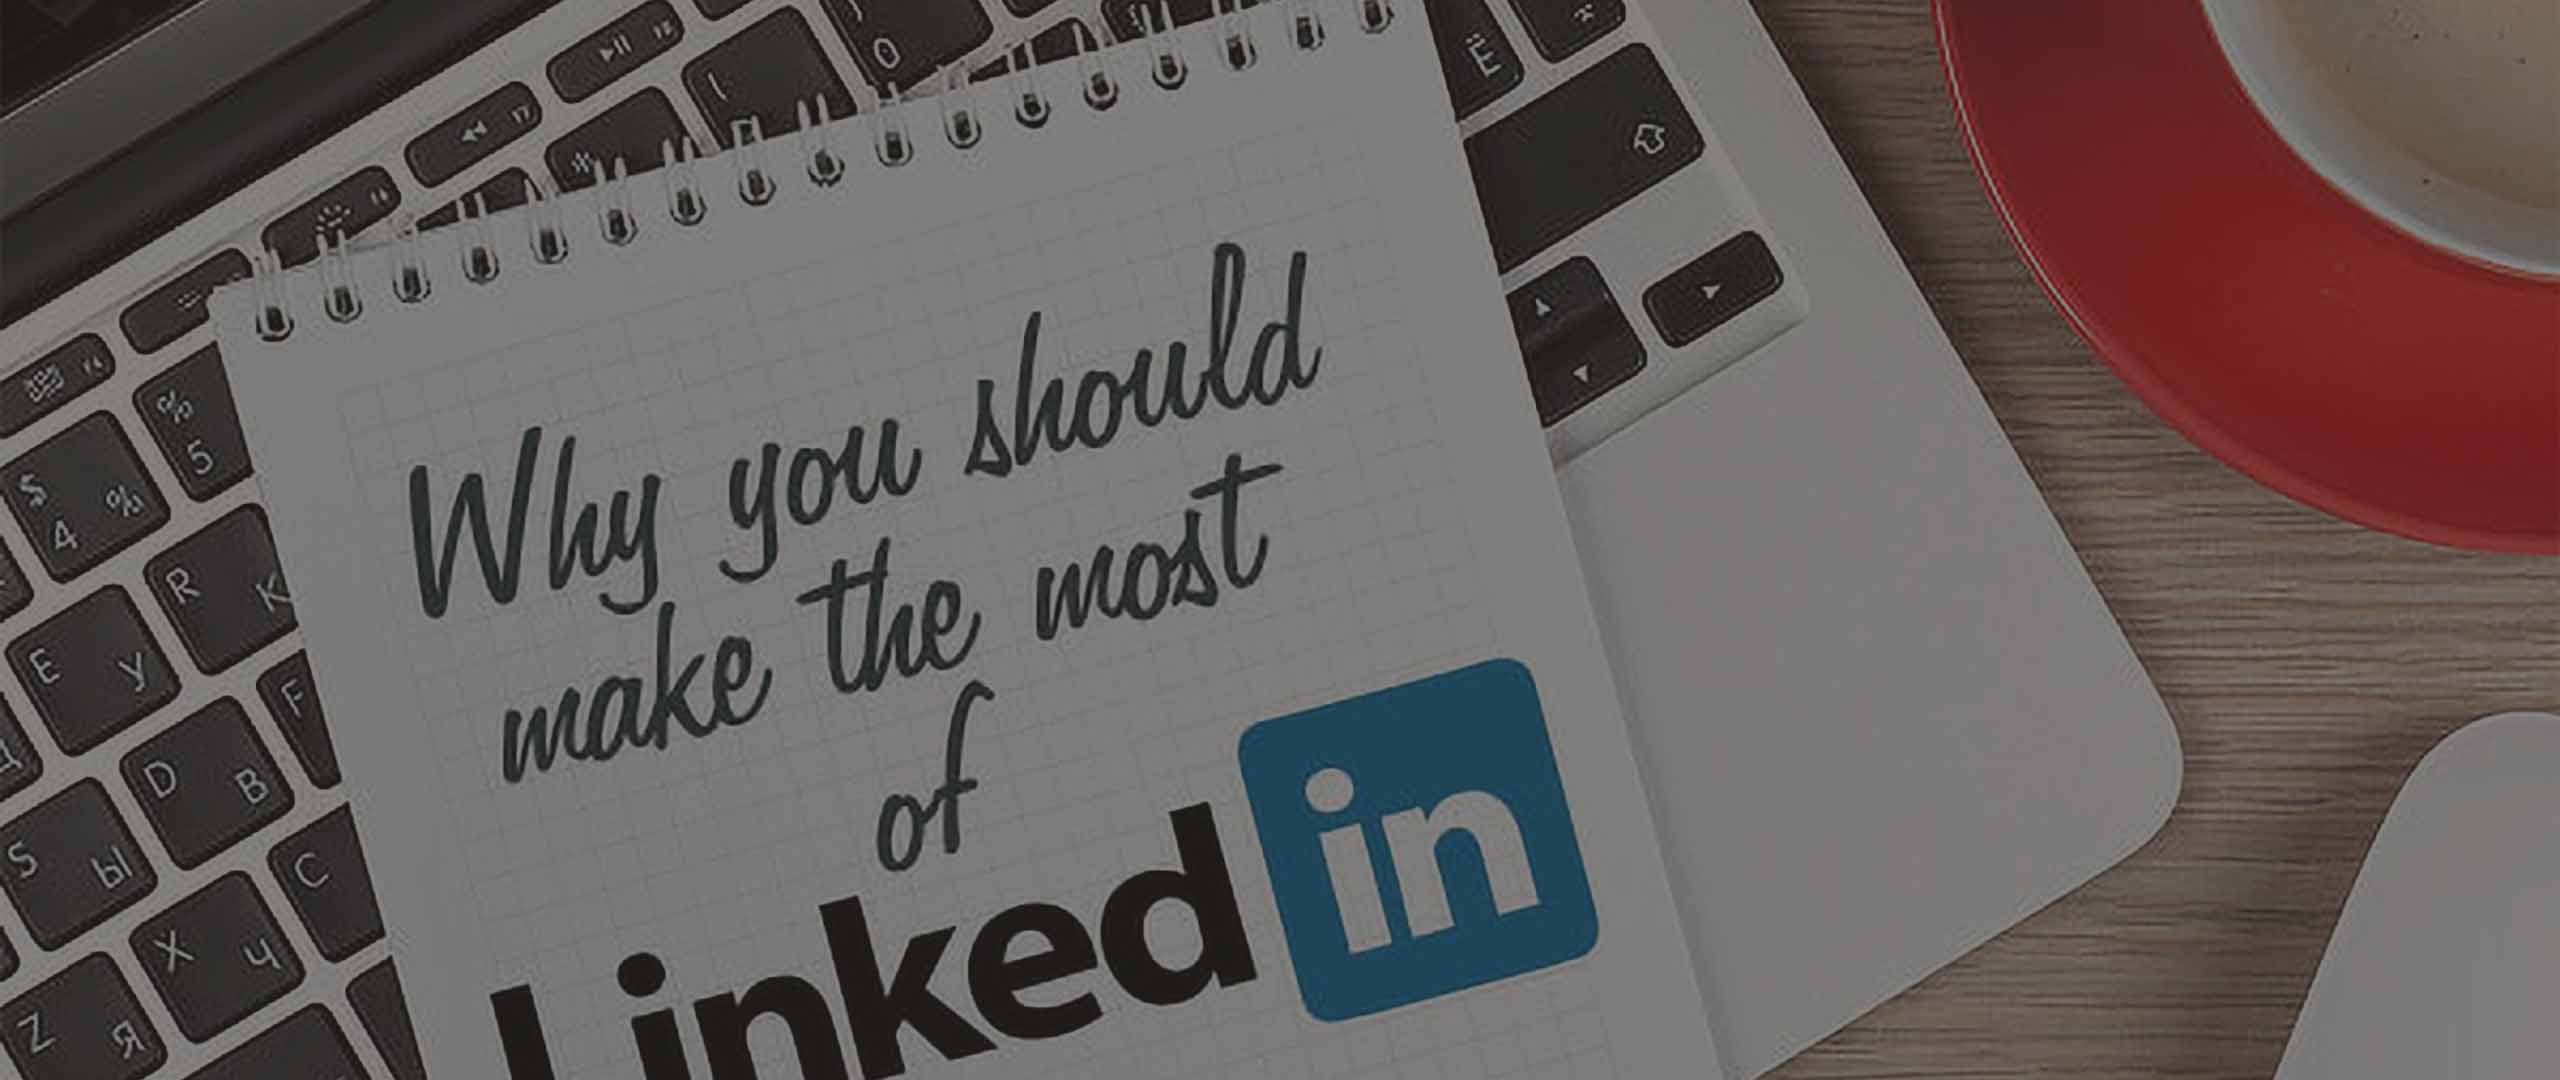 You Should Make The Most Of LinkedIn